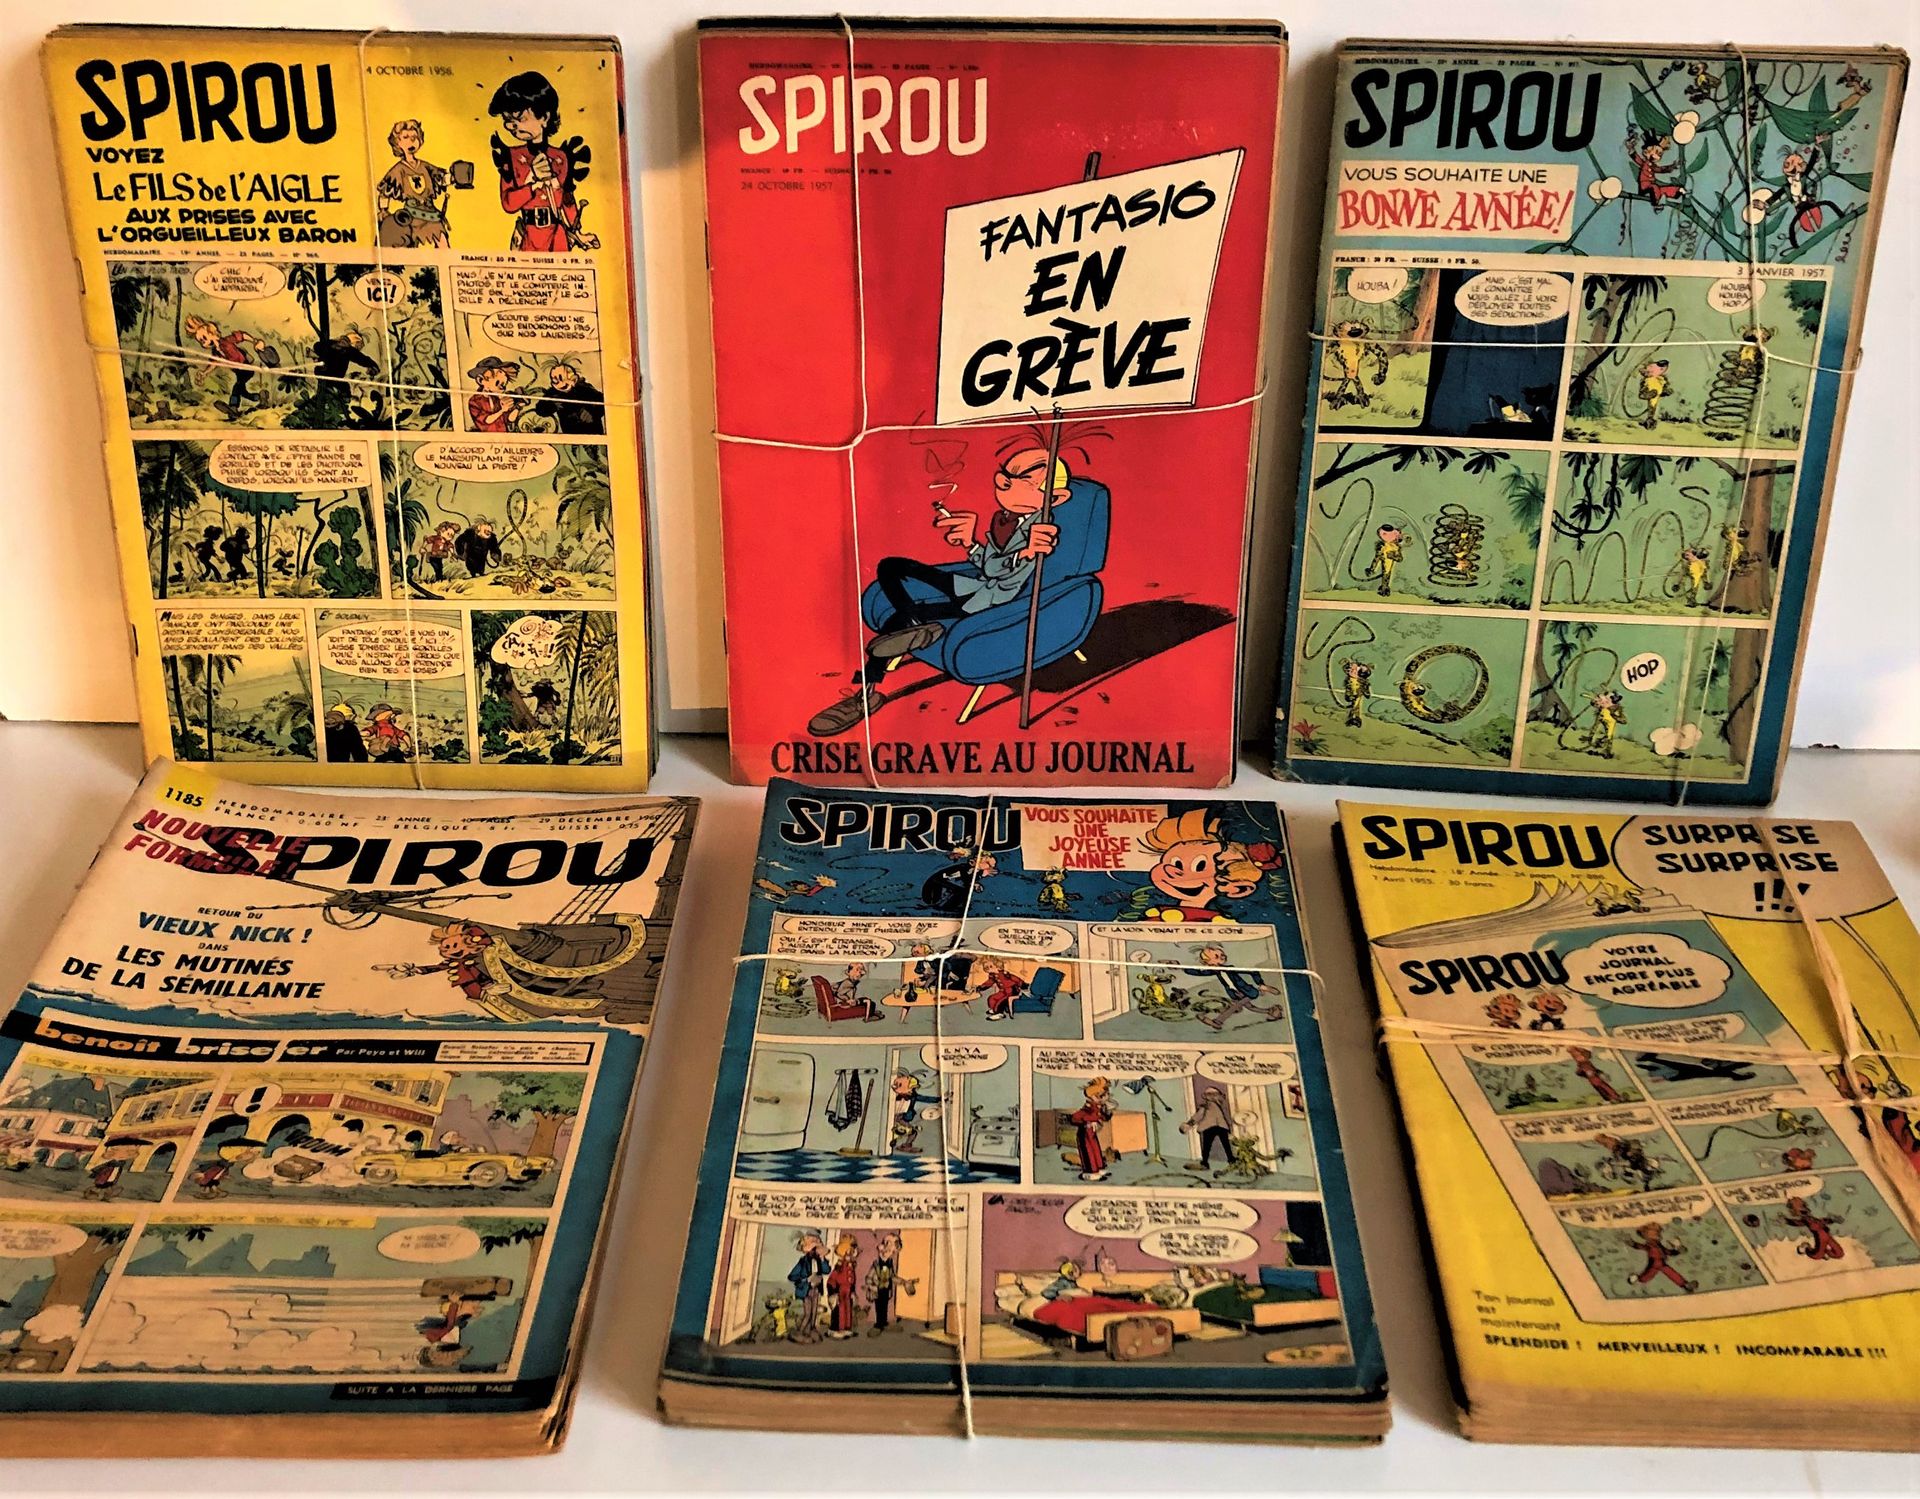 FRANQUIN Serie SPIROU REVUE - Unos 430 números de 1953 a 1962 - Buen estado -